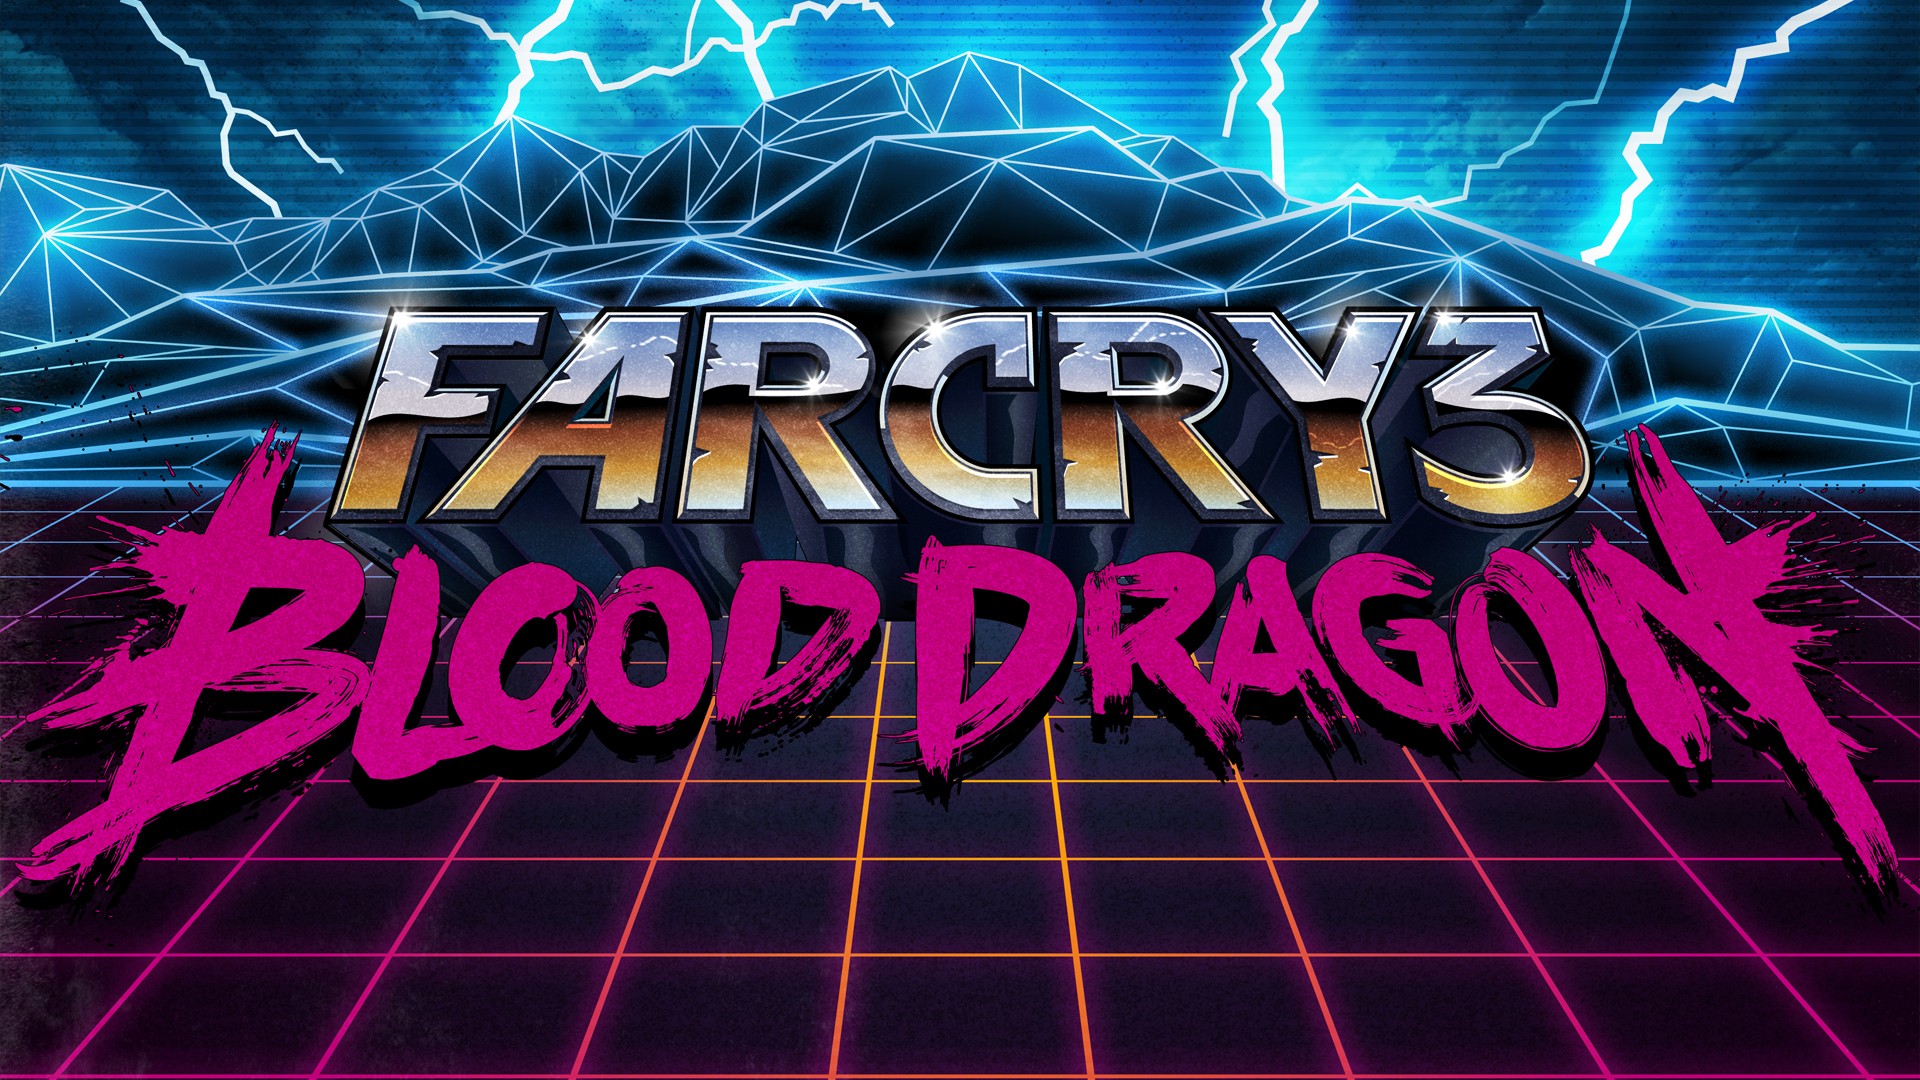 free download far cry blood dragon